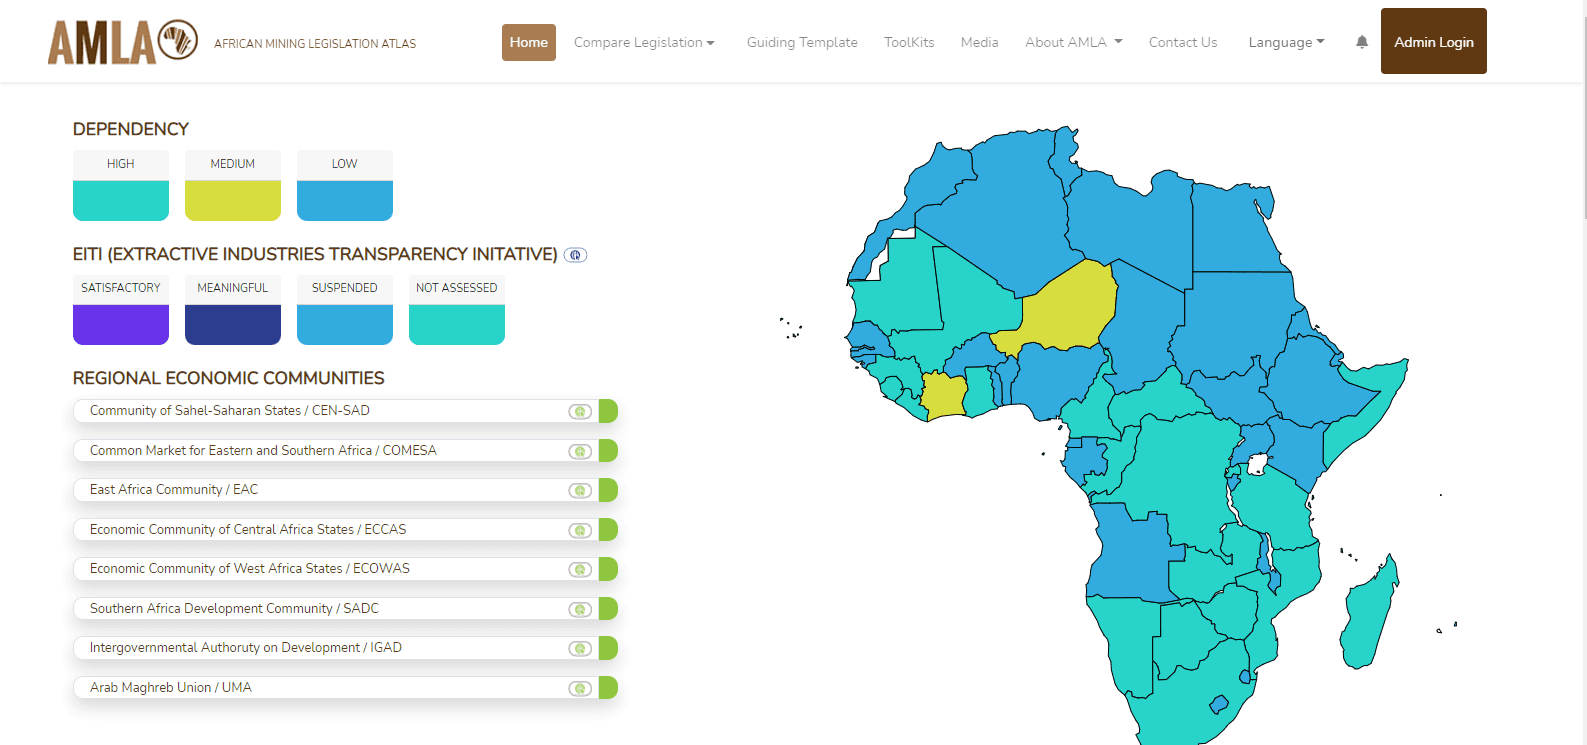 Africa Mining Legislation Atlas (AMLA)